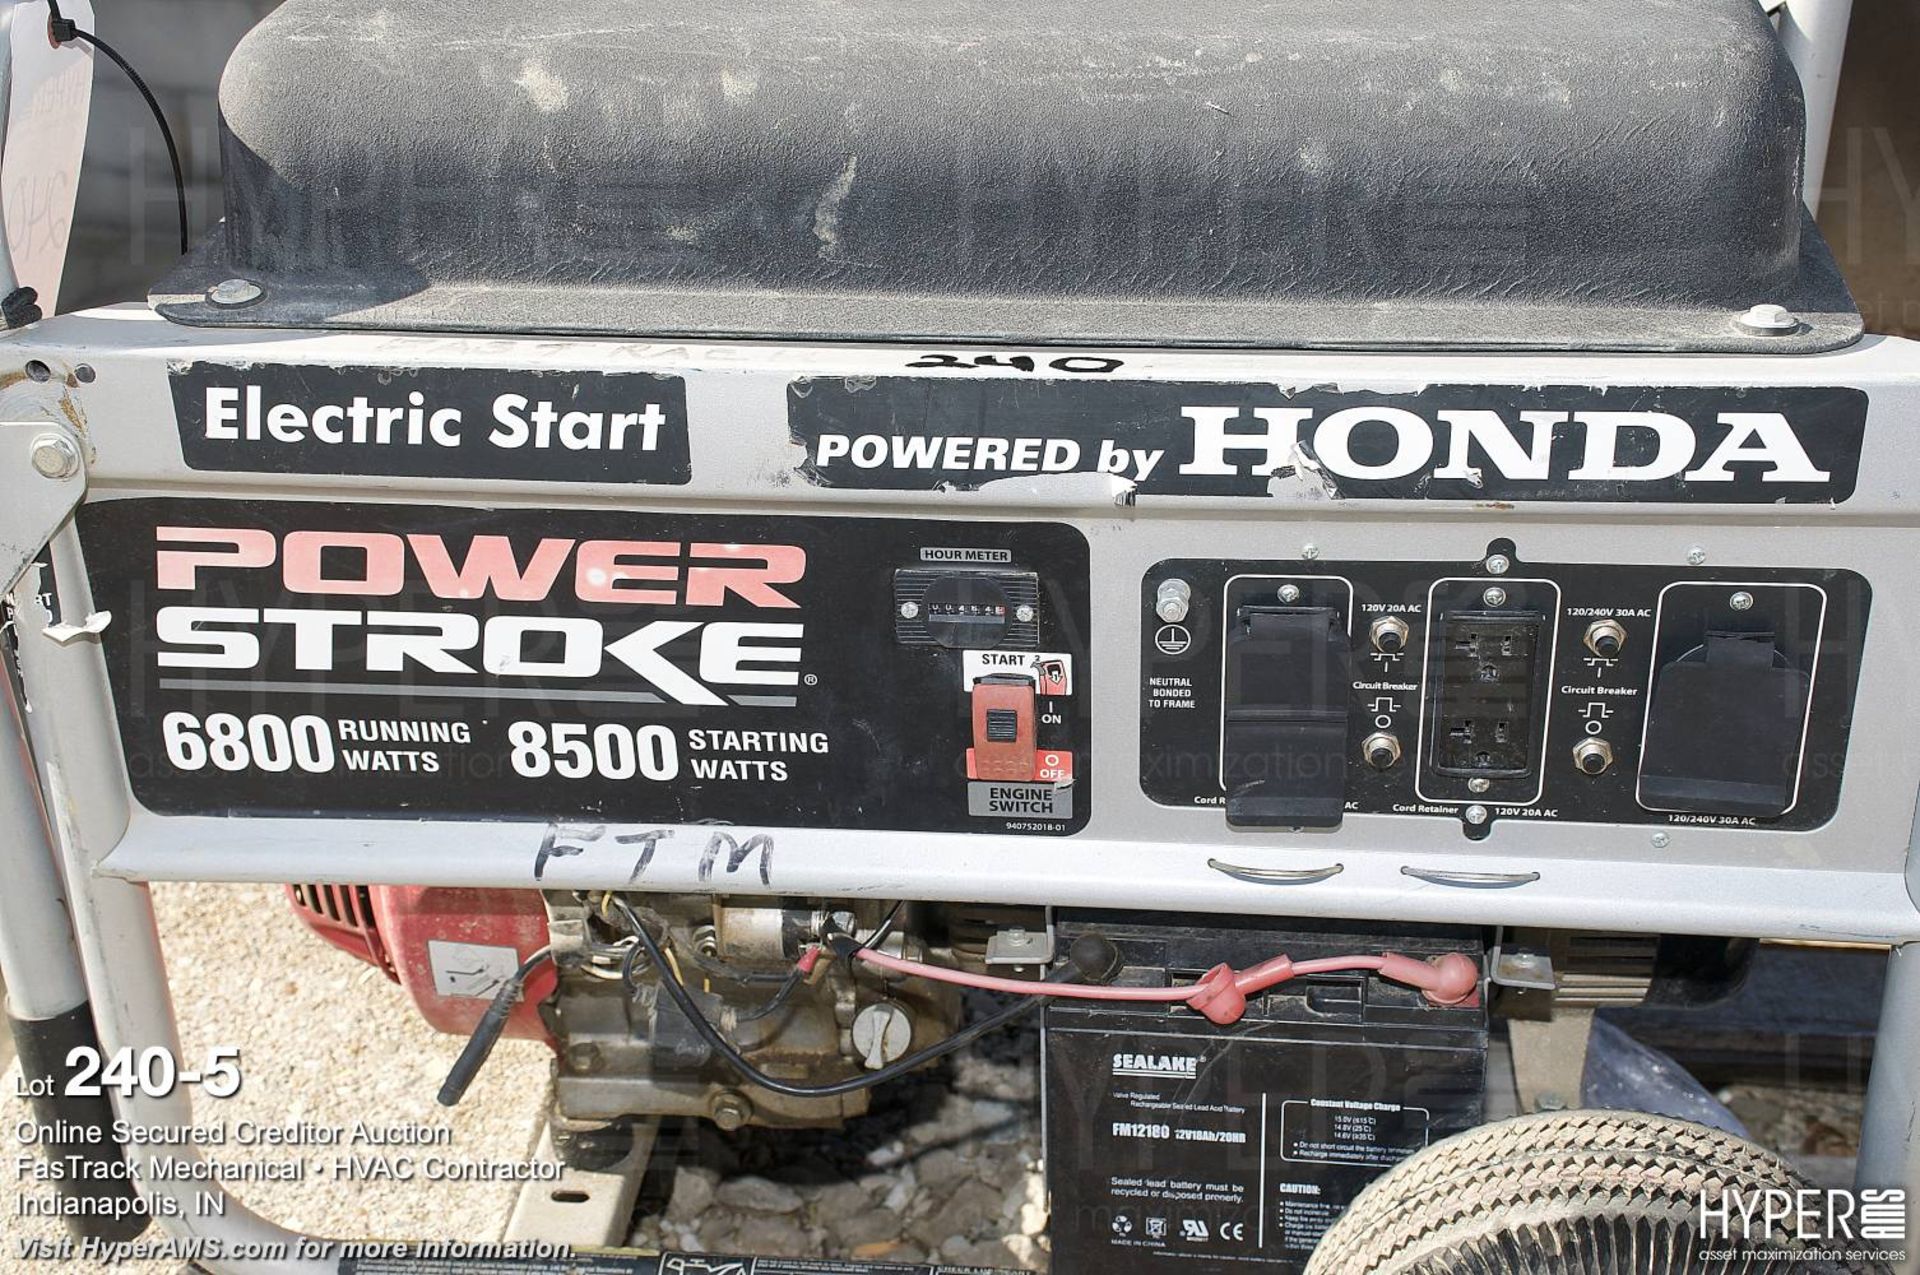 Honda 8500 watt gasoline generator - Image 5 of 6